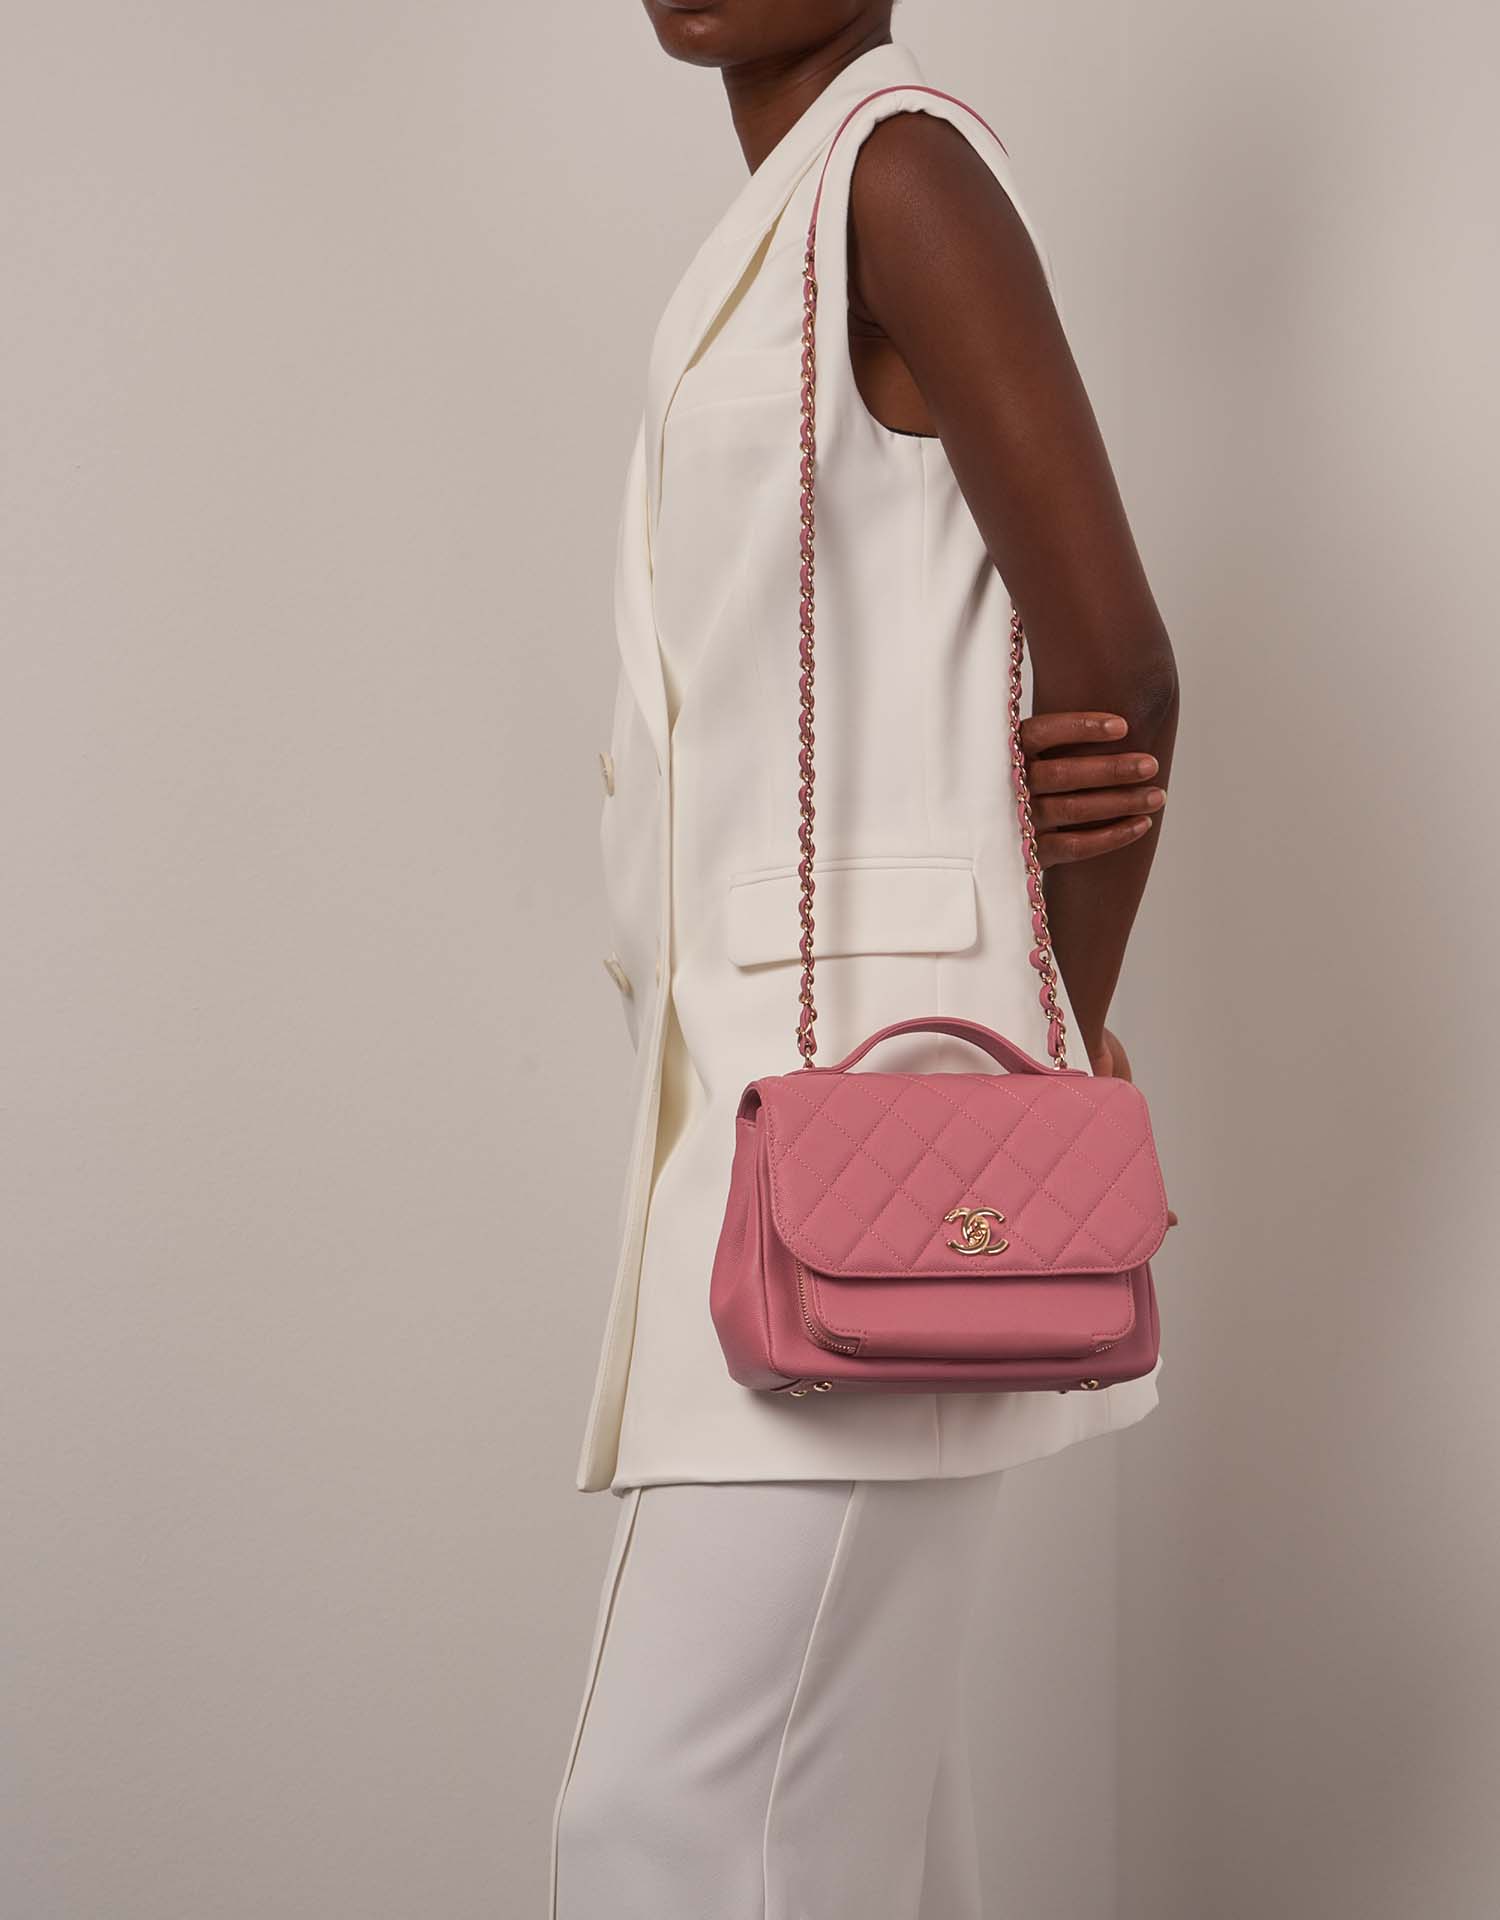 Chanel BusinessAffinity Medium PInk on Model | Sell your designer bag on Saclab.com